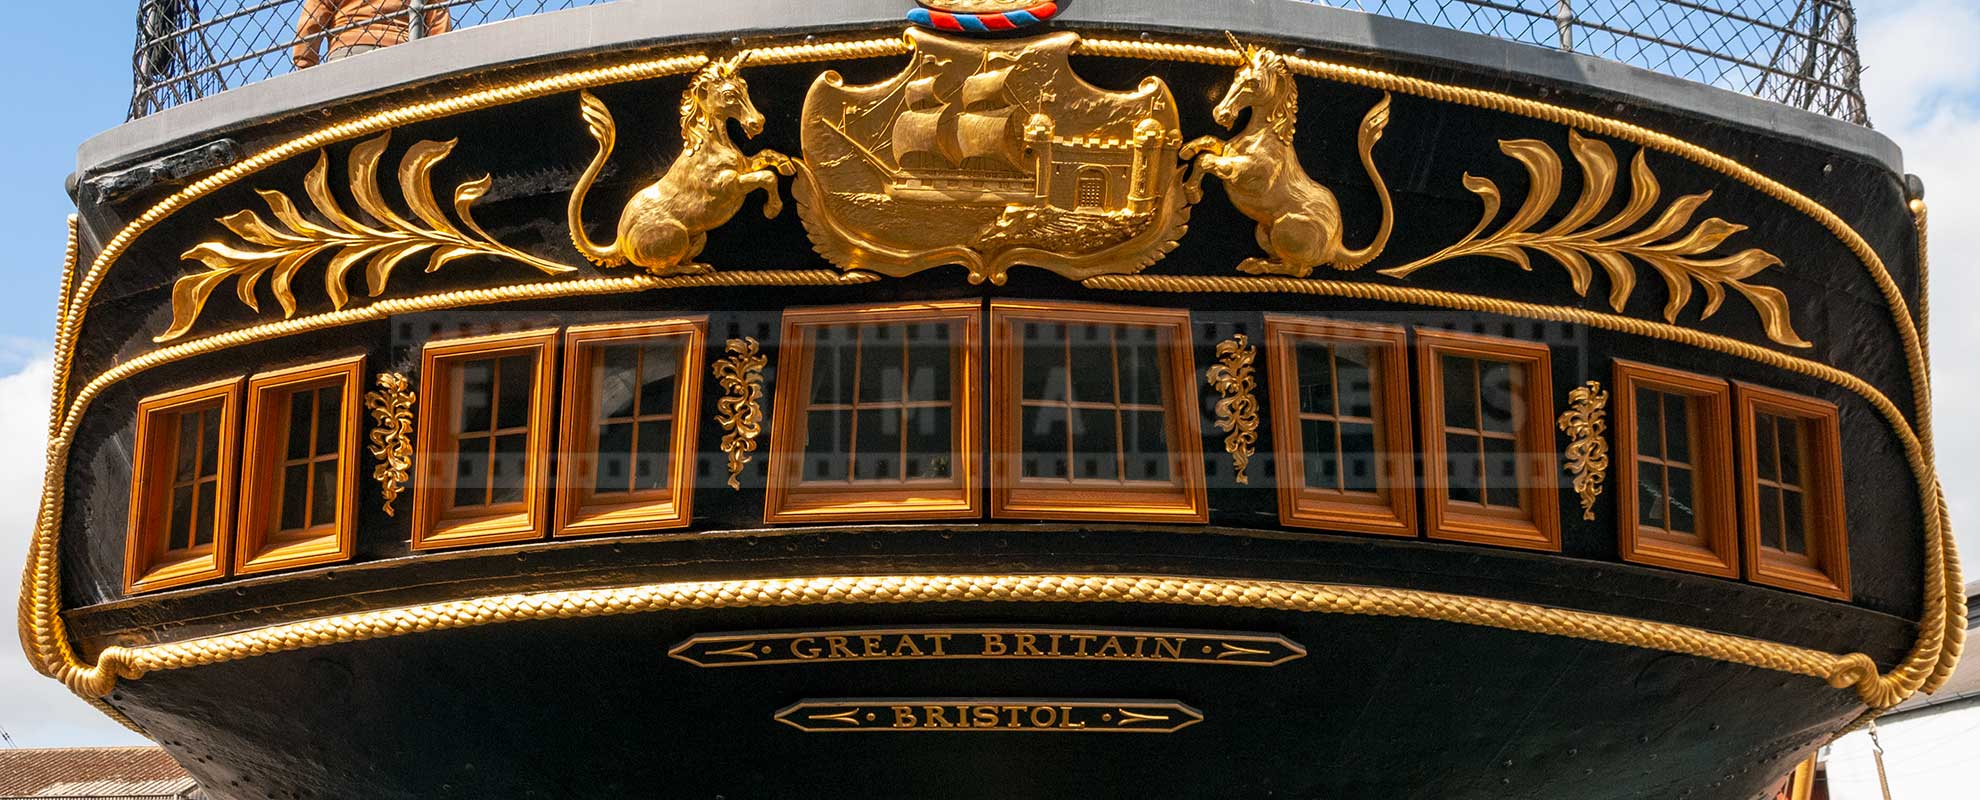 steamship Great Britain golden decorations